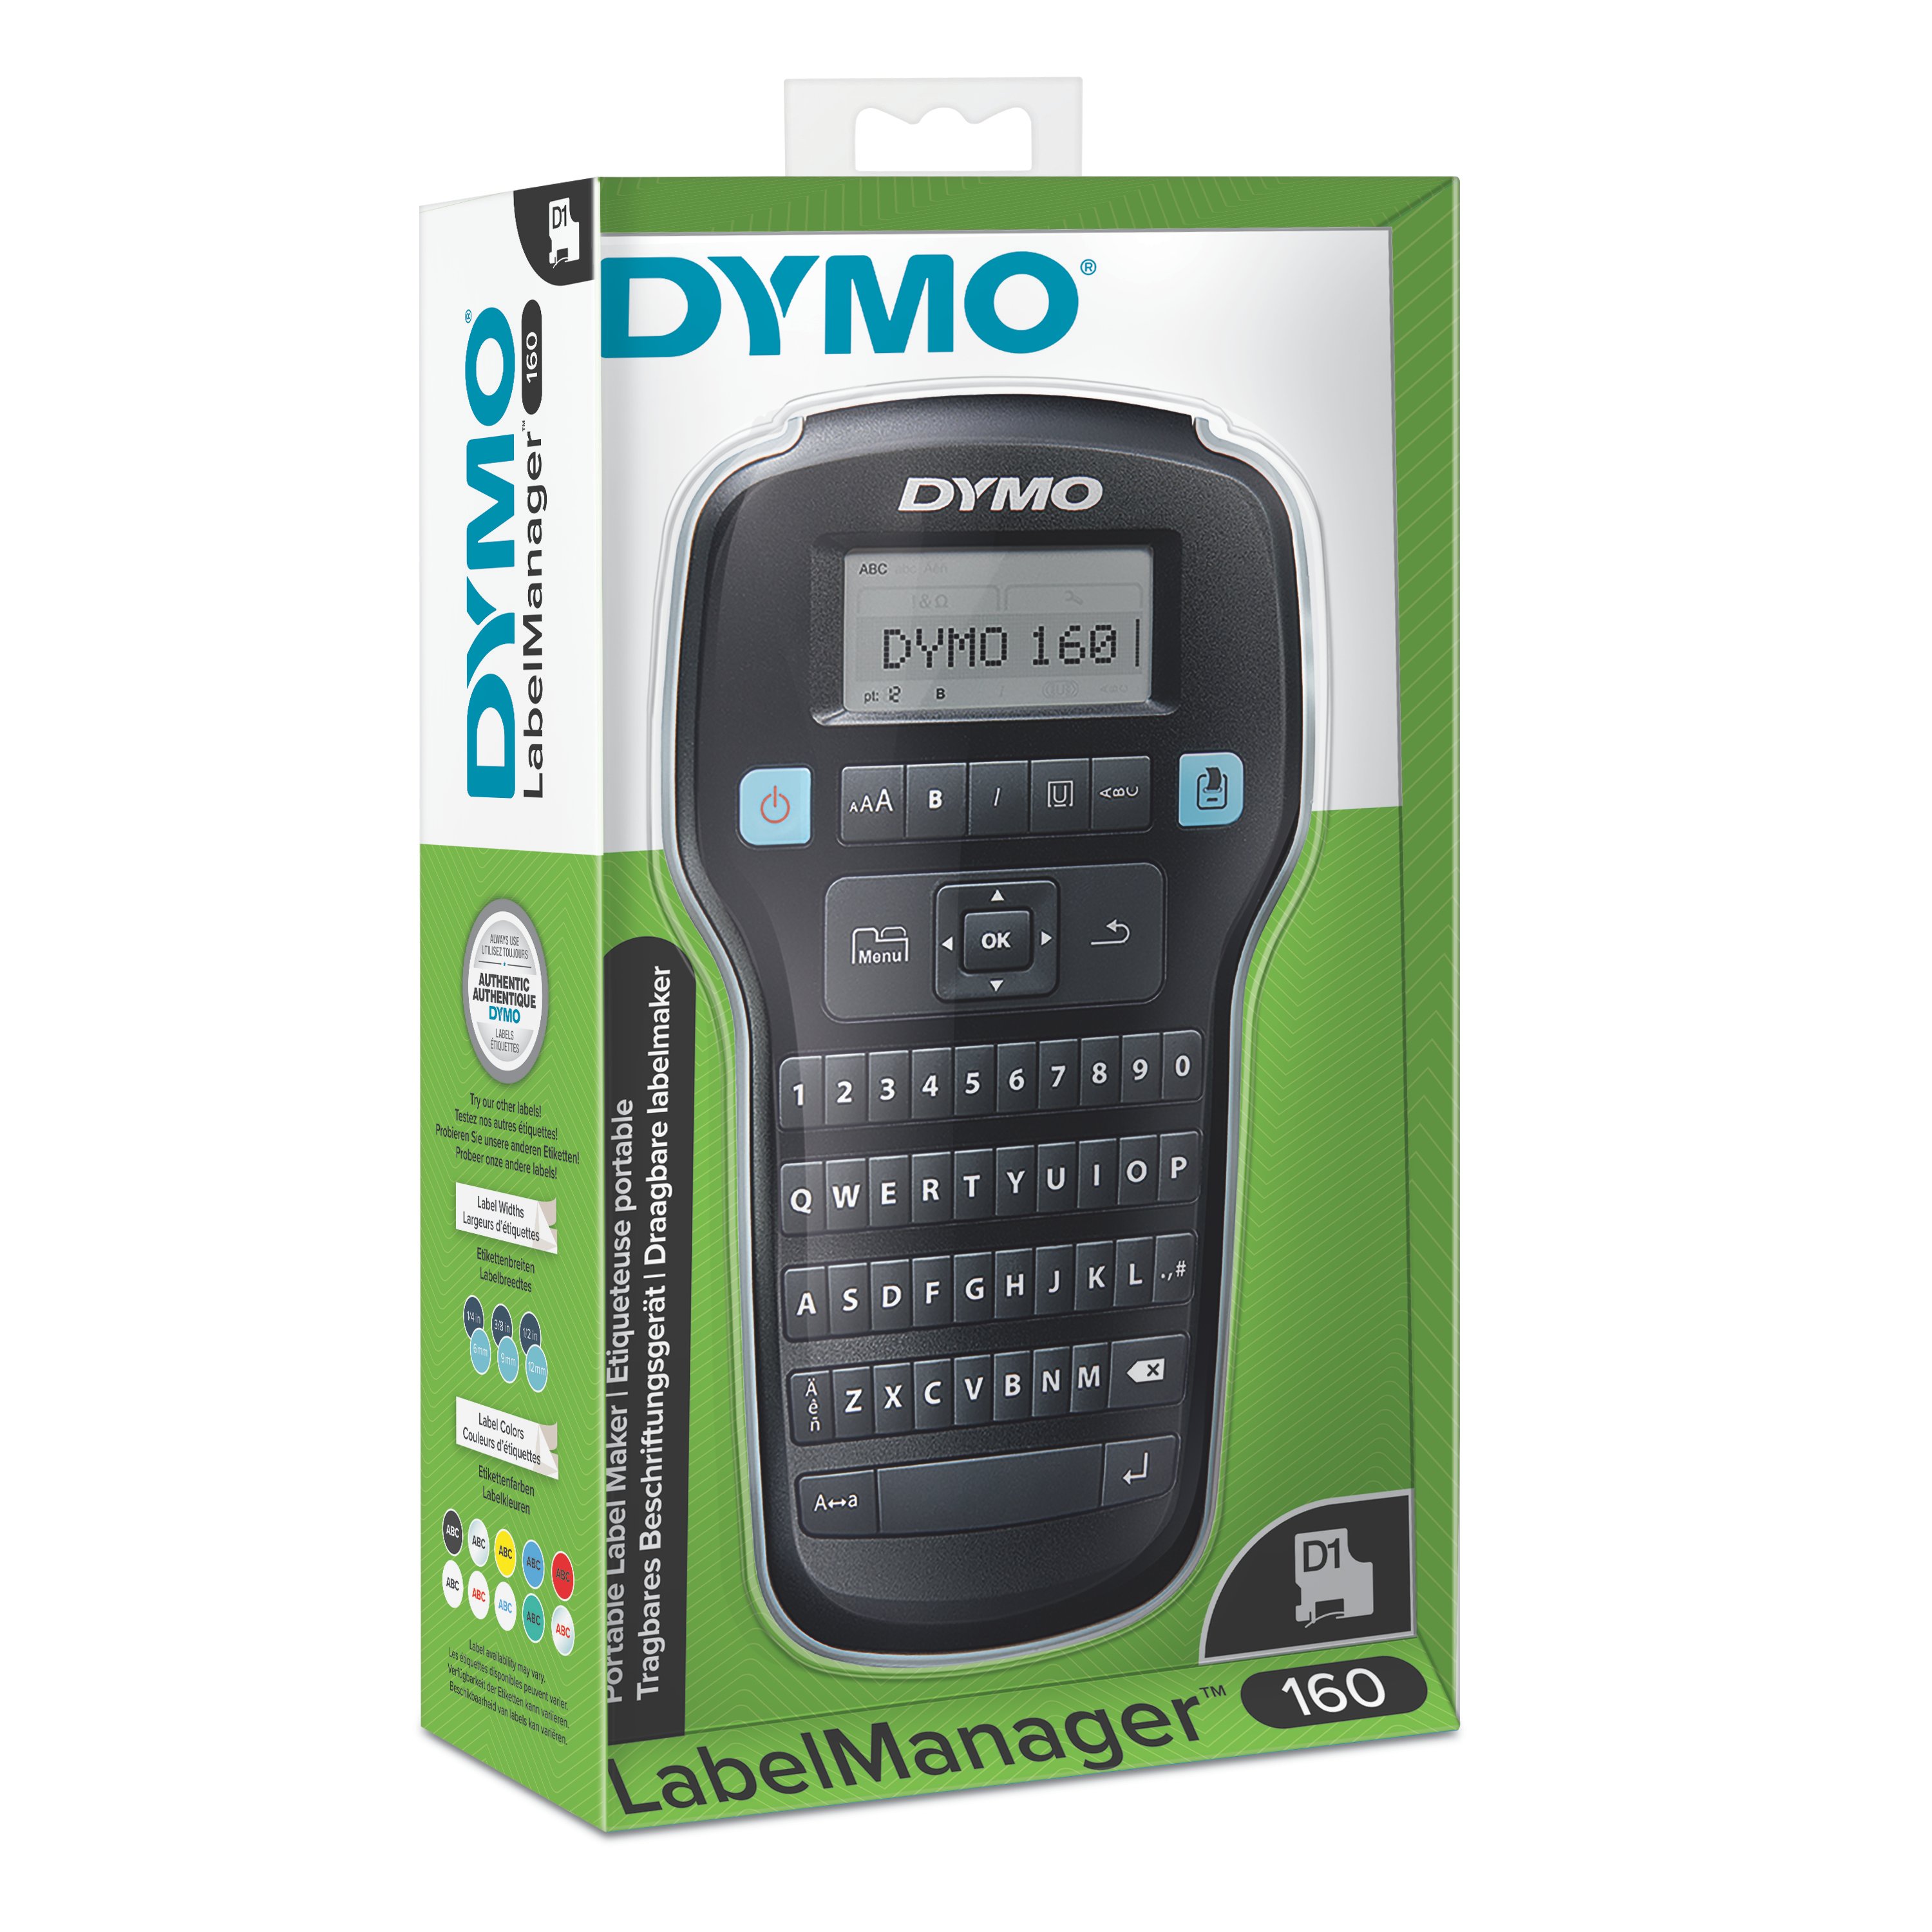 DYMO LabelManager 160 Portable Label Maker | Dymo